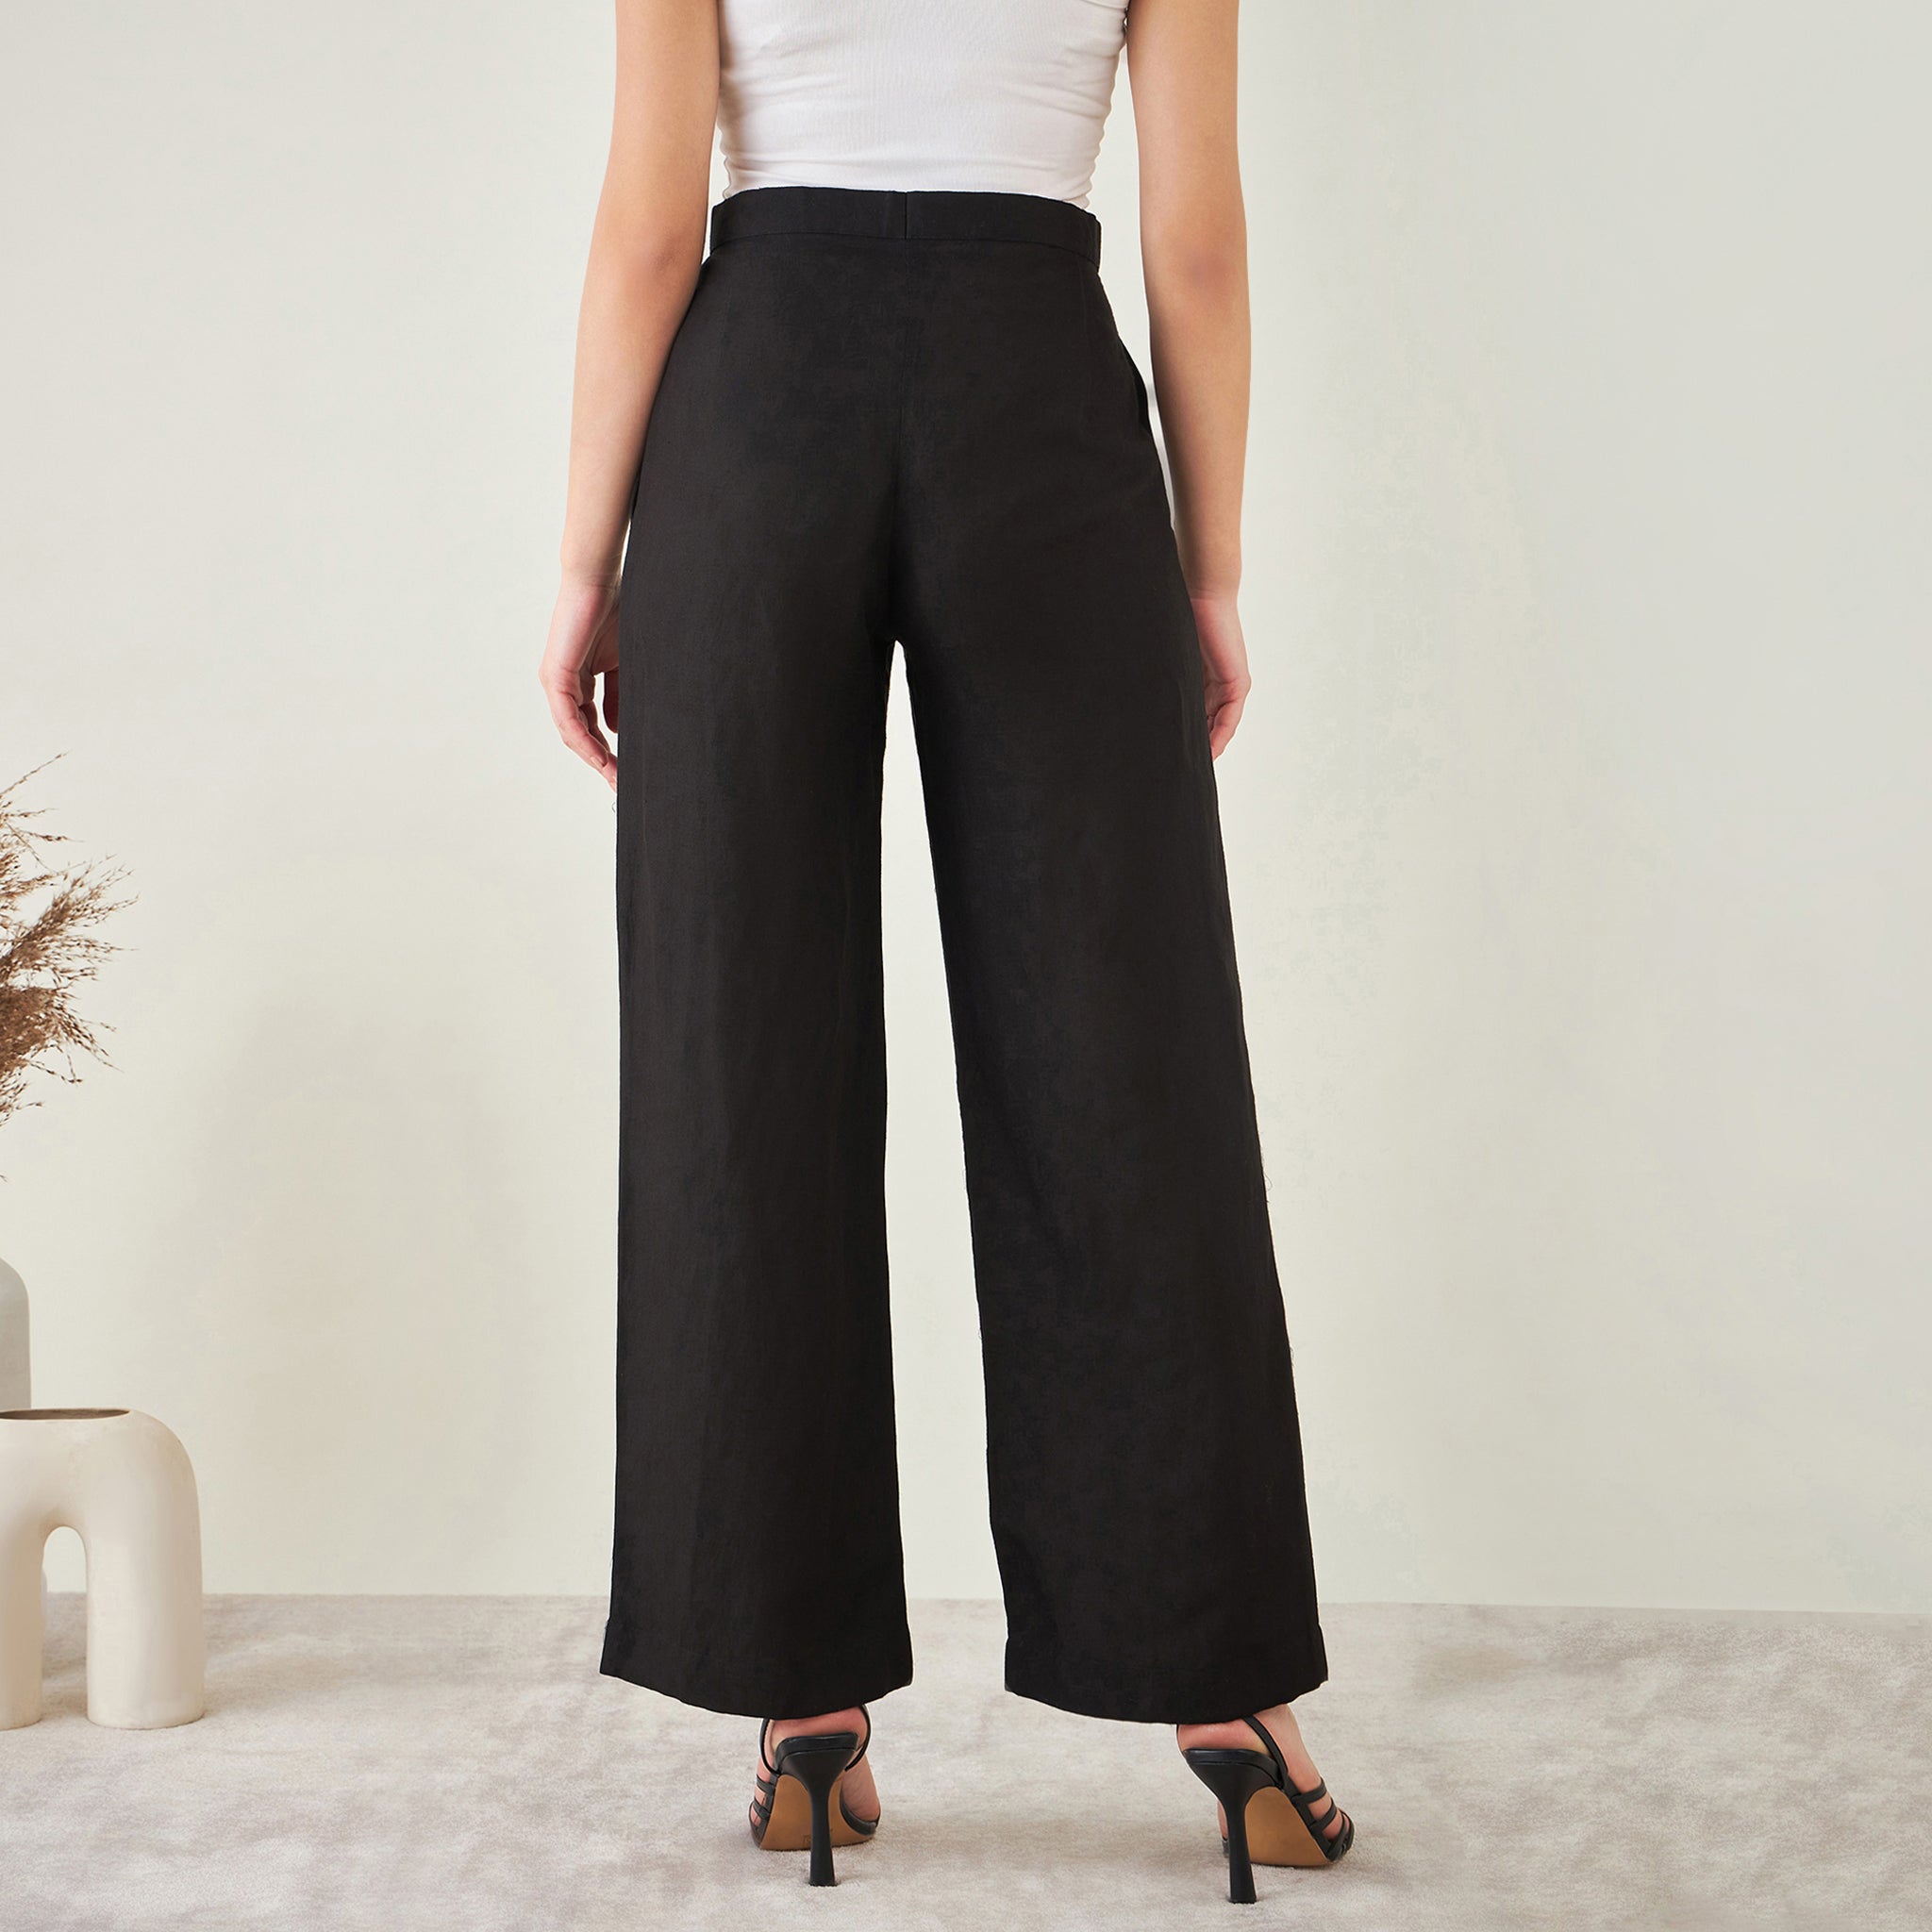 Amazon.com: Black Linen Pants Women